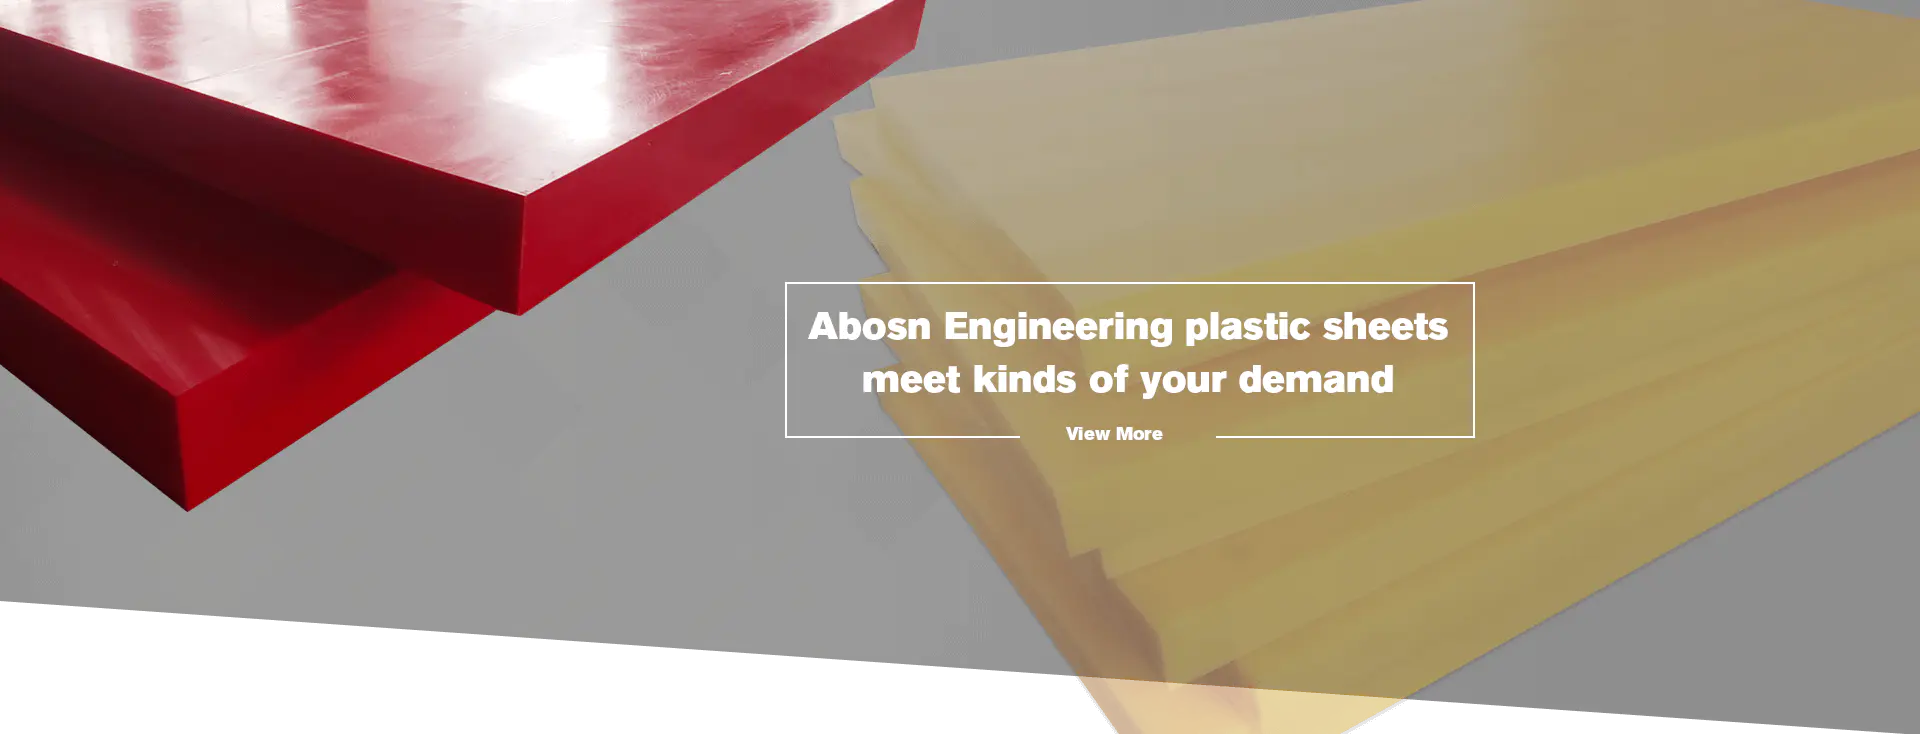 Abosn Engineering plastic sheets